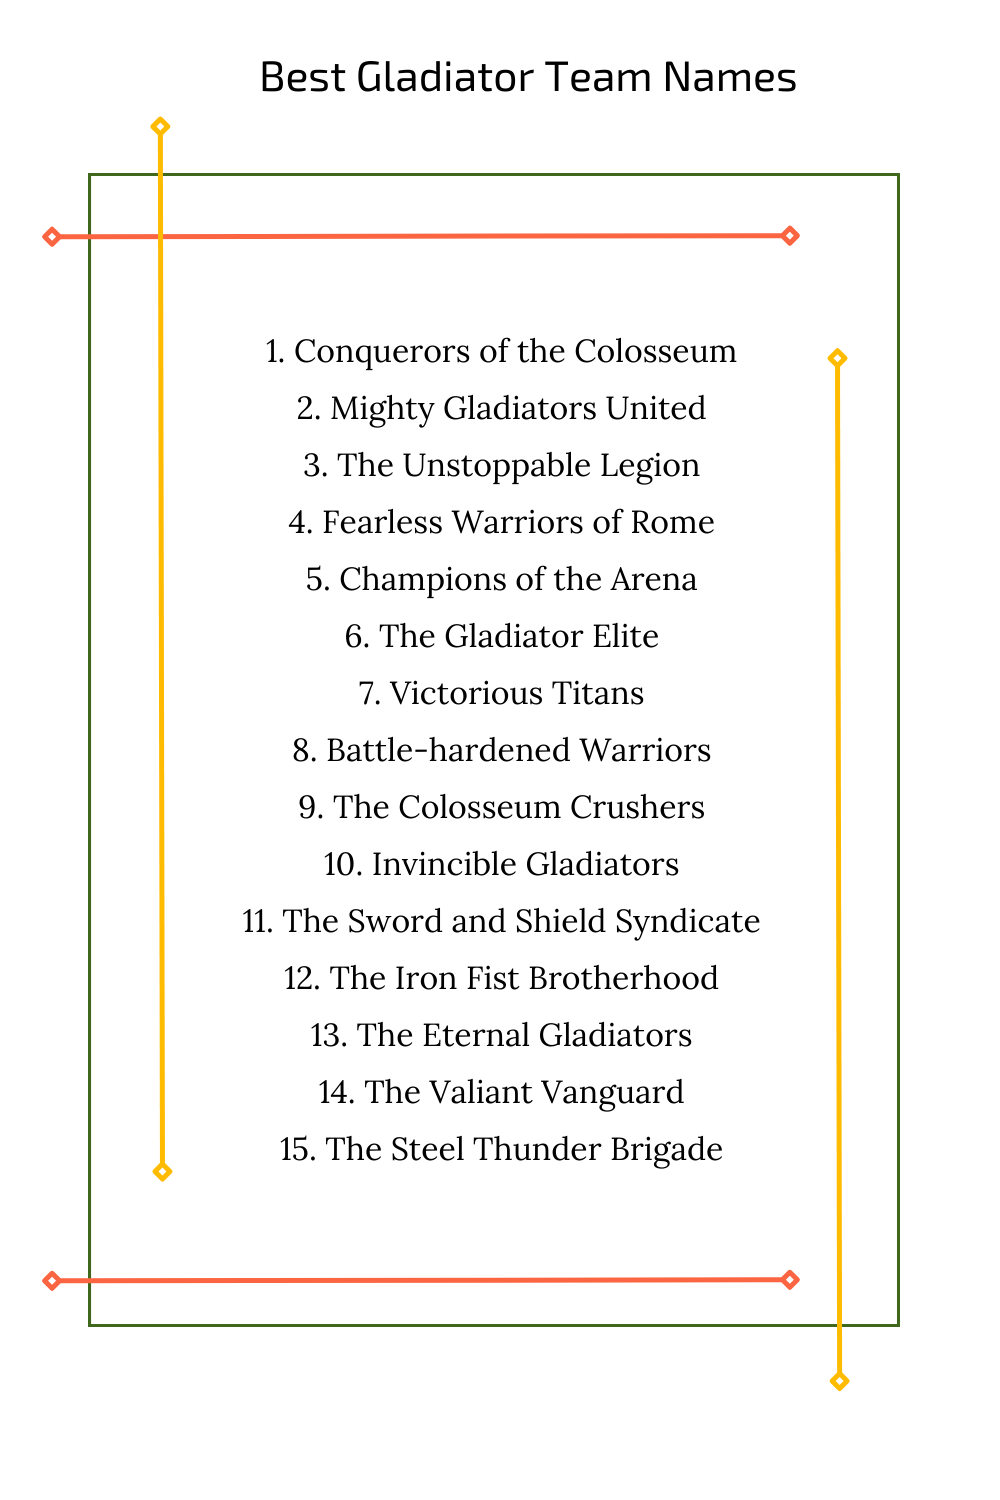 Best Gladiator Team Names